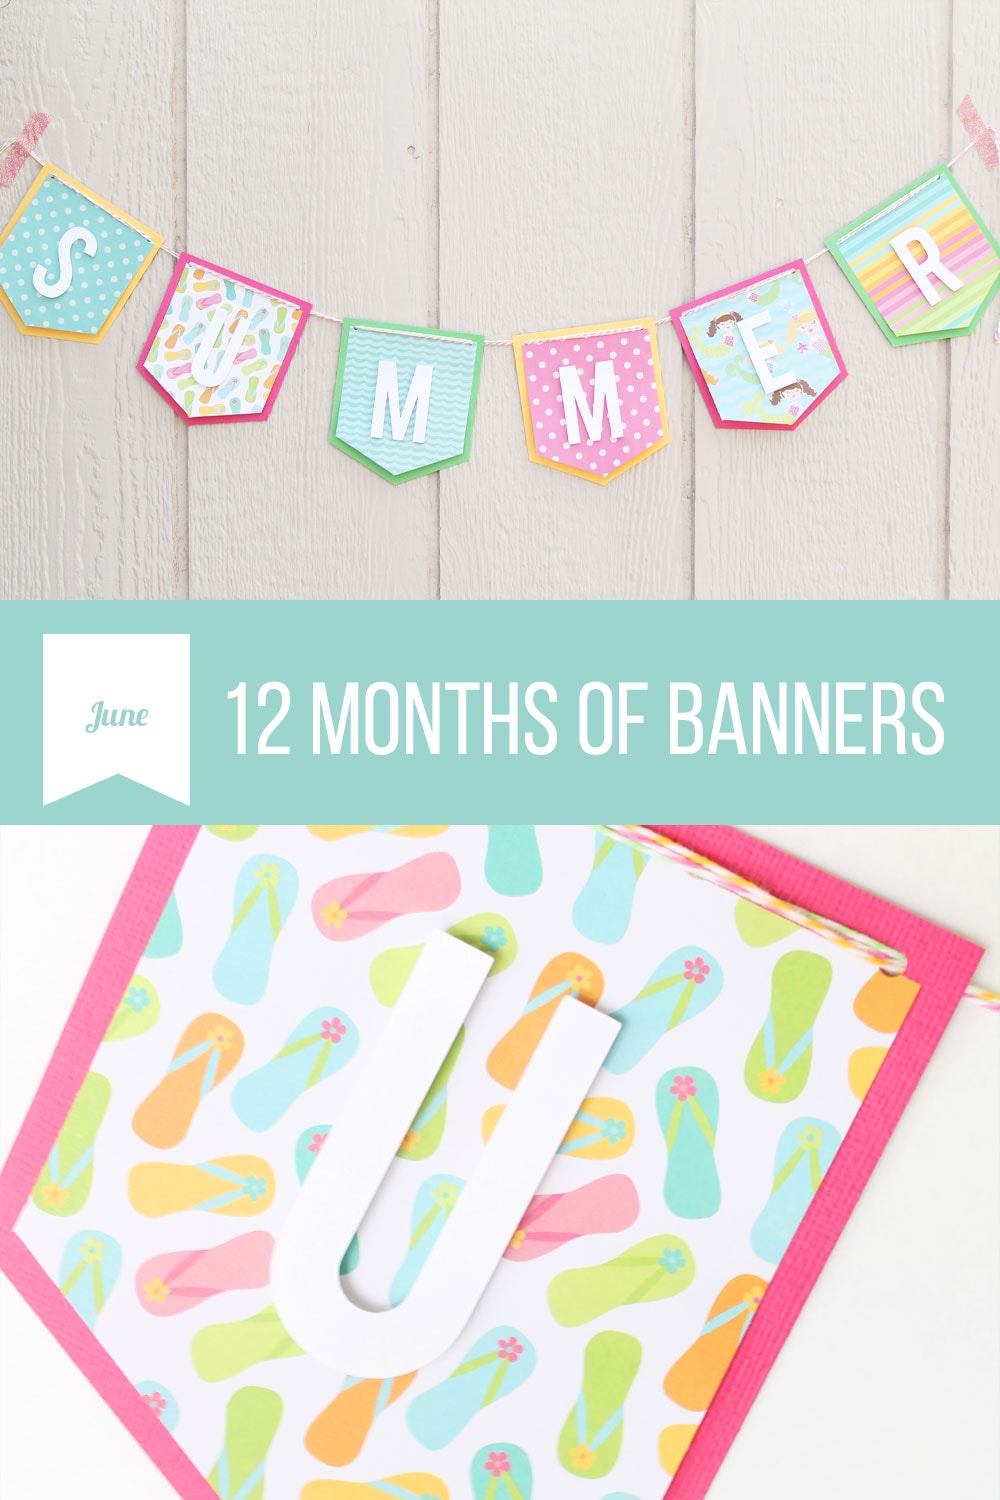 june summer banner - 12 months of banners